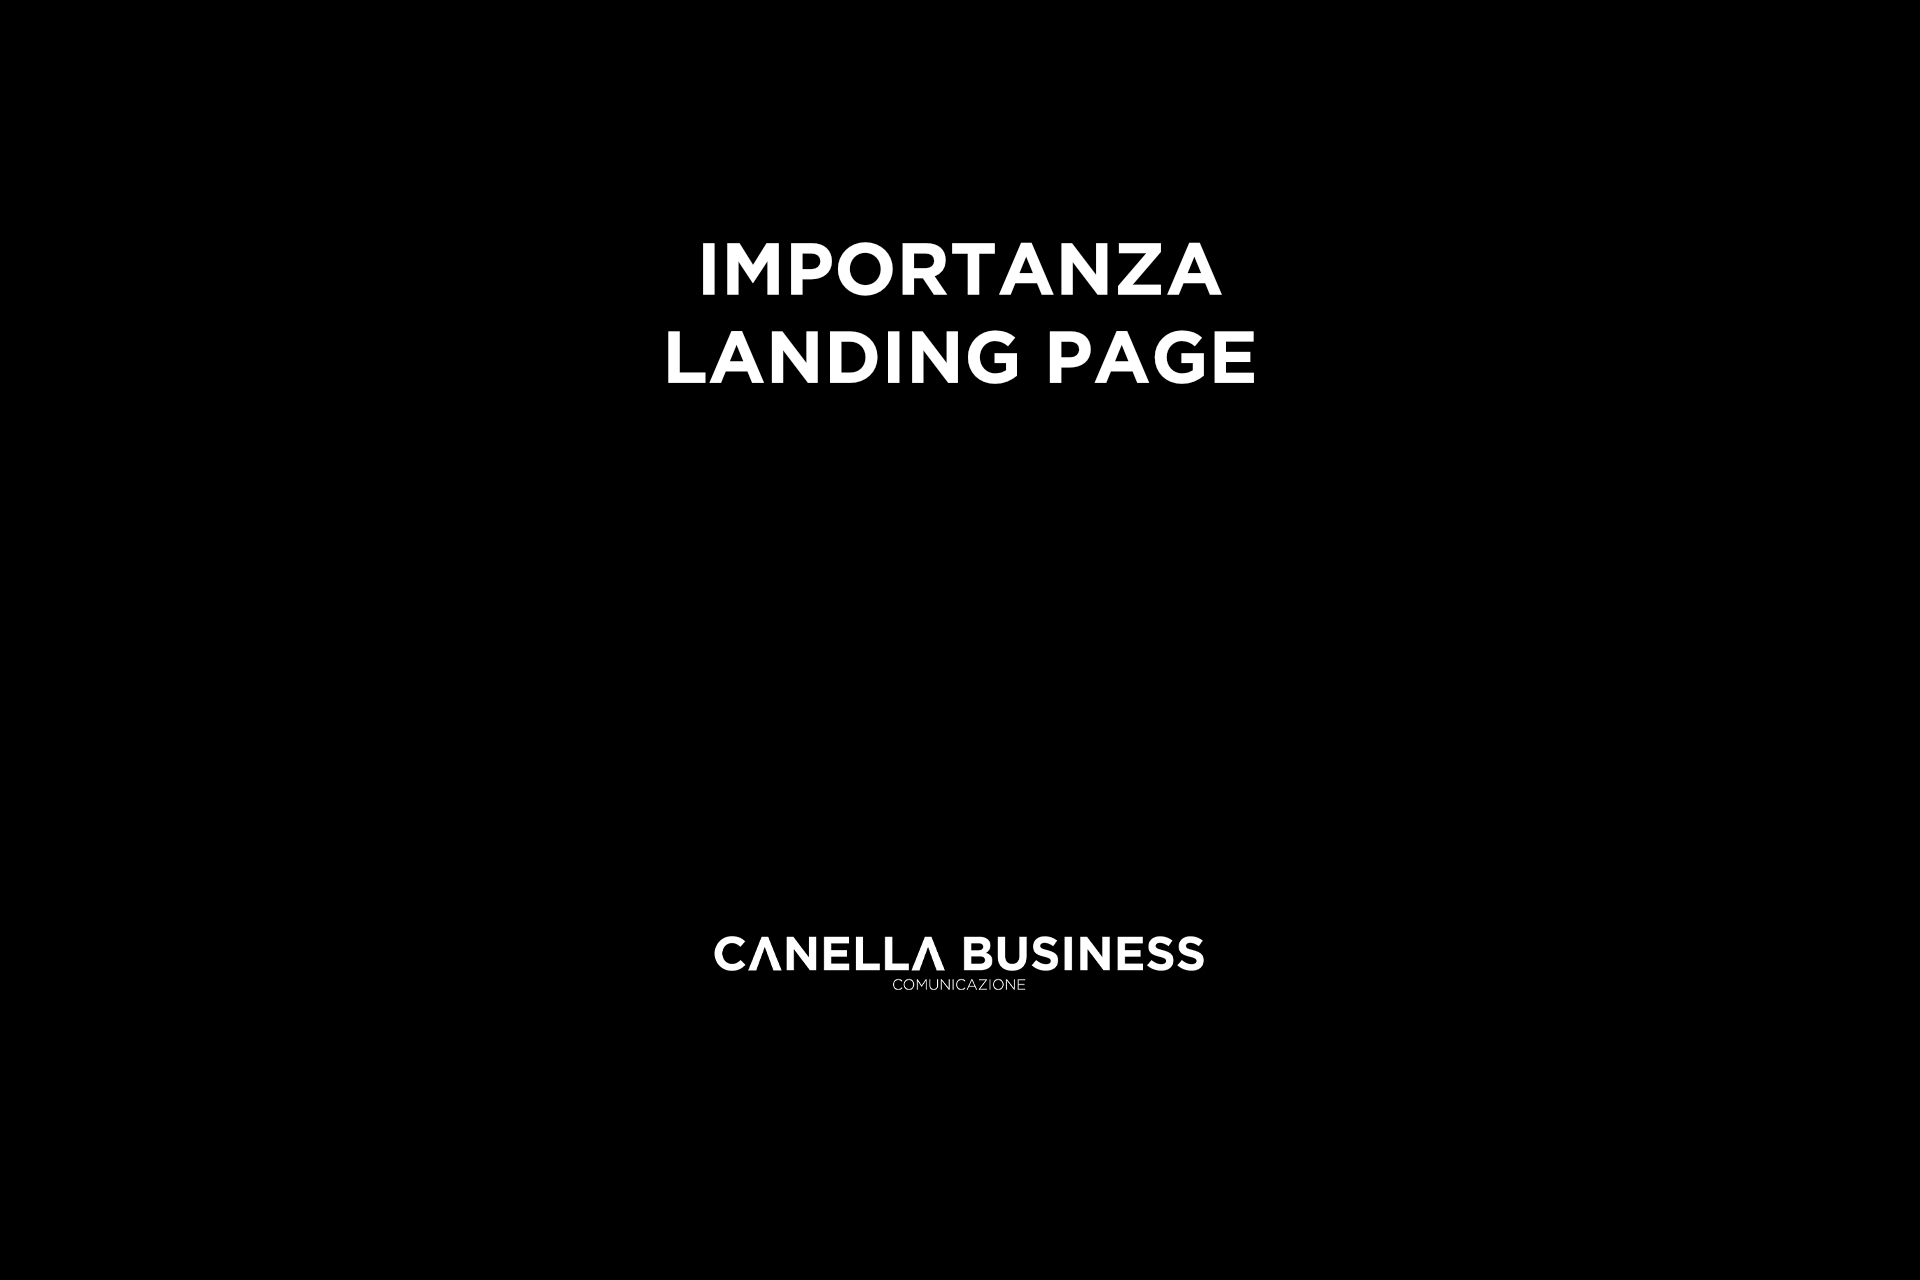 Importanza landing page